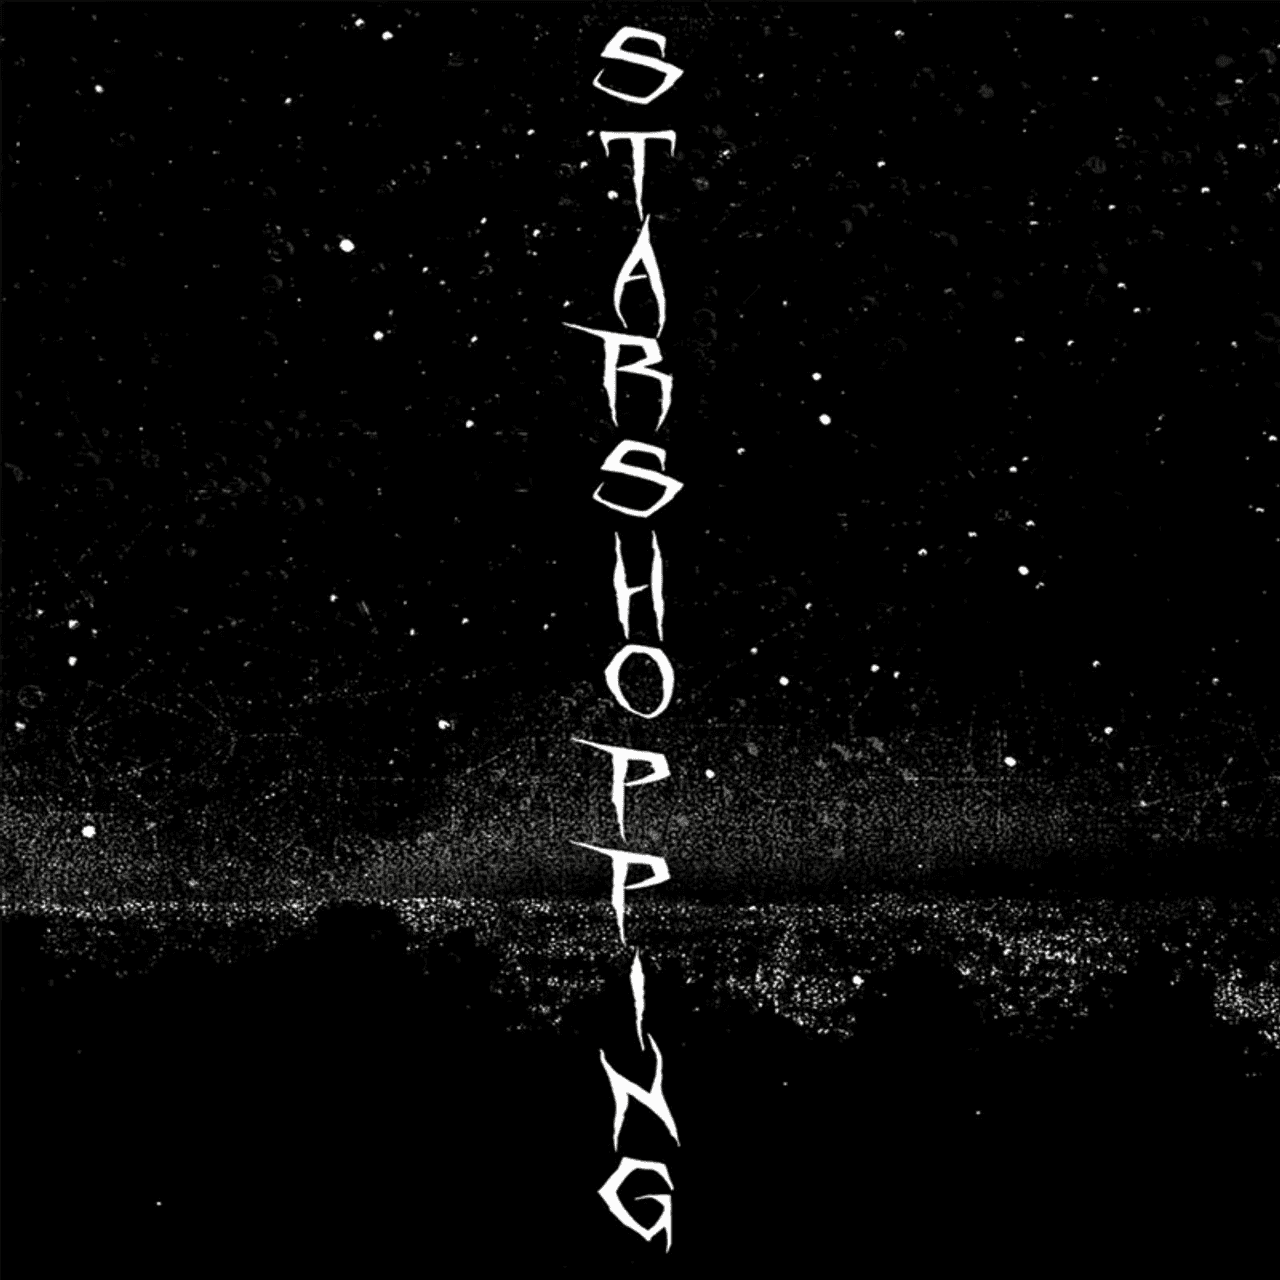 LIL PEEP -  Star Shopping 7" Single RSD24 Vinyl